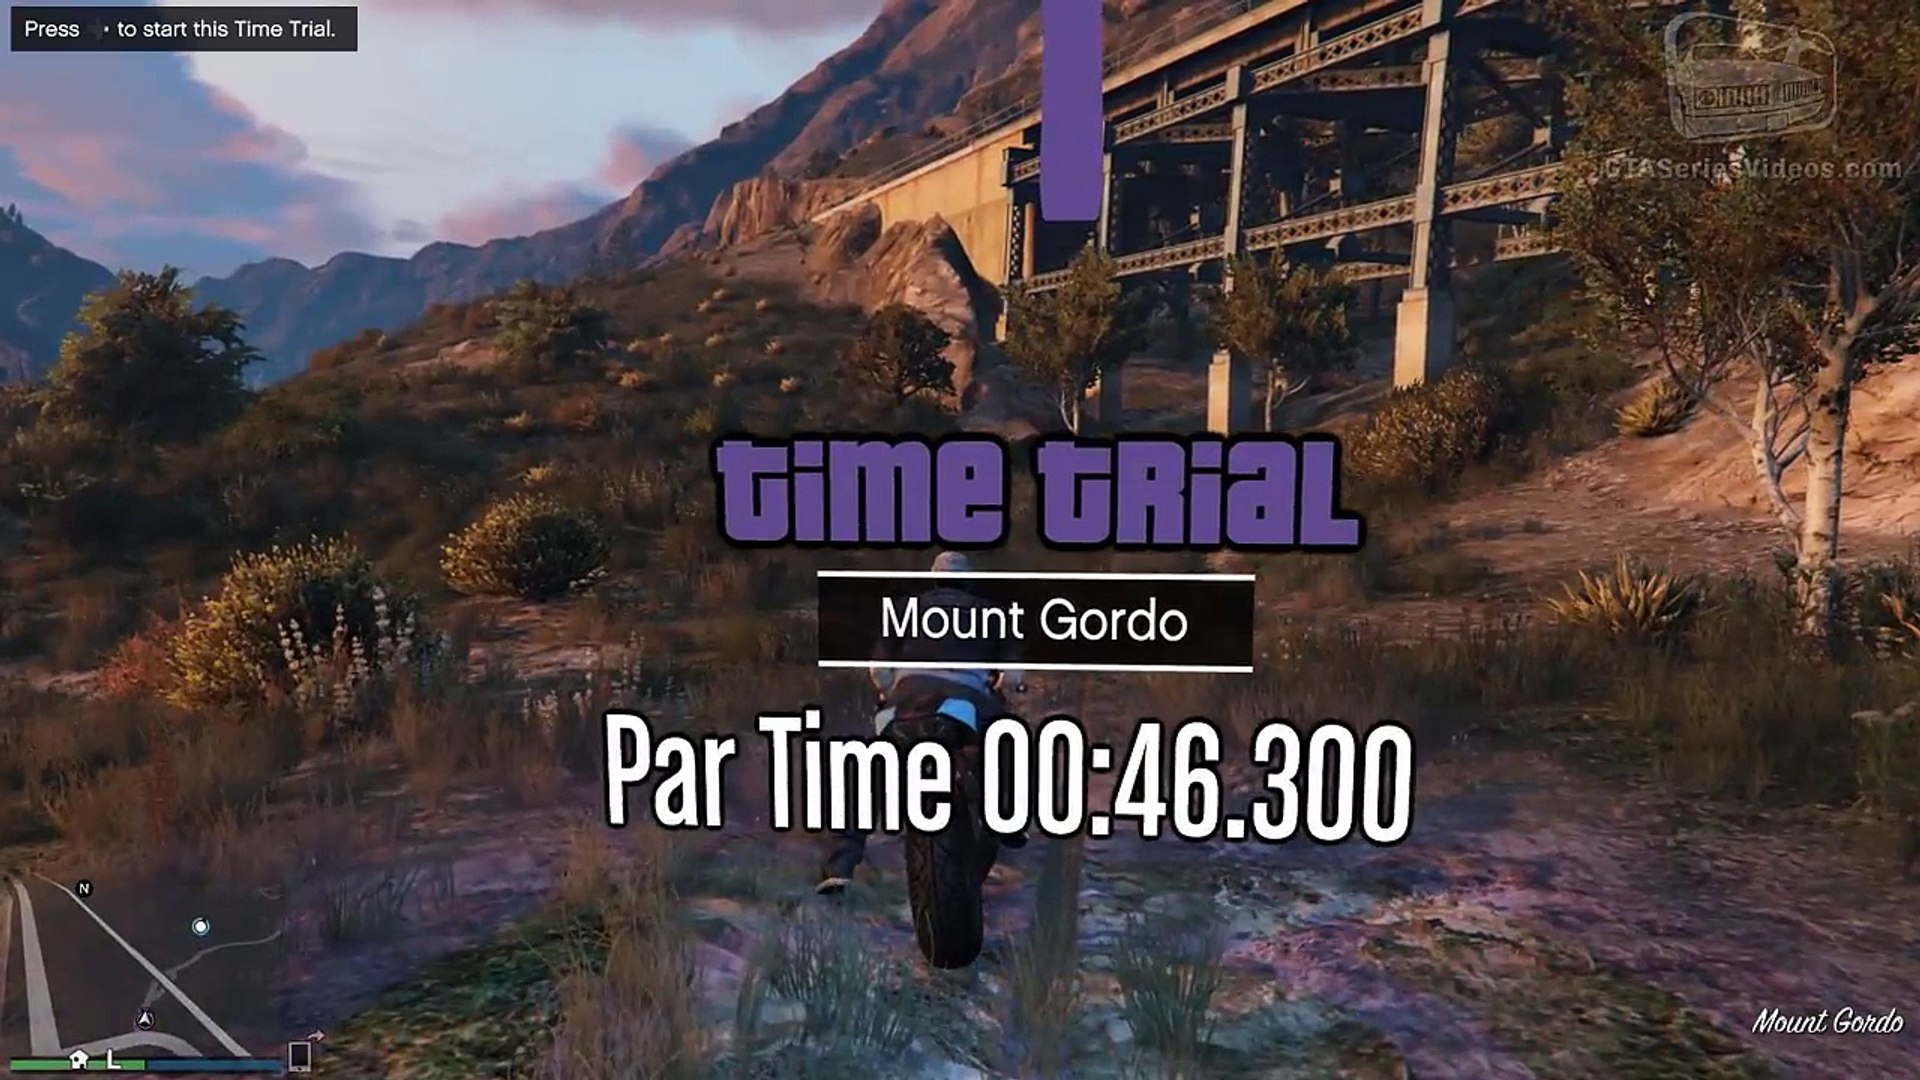 Gta Online Time Trial Mount Gordo Under Par Time Video Dailymotion